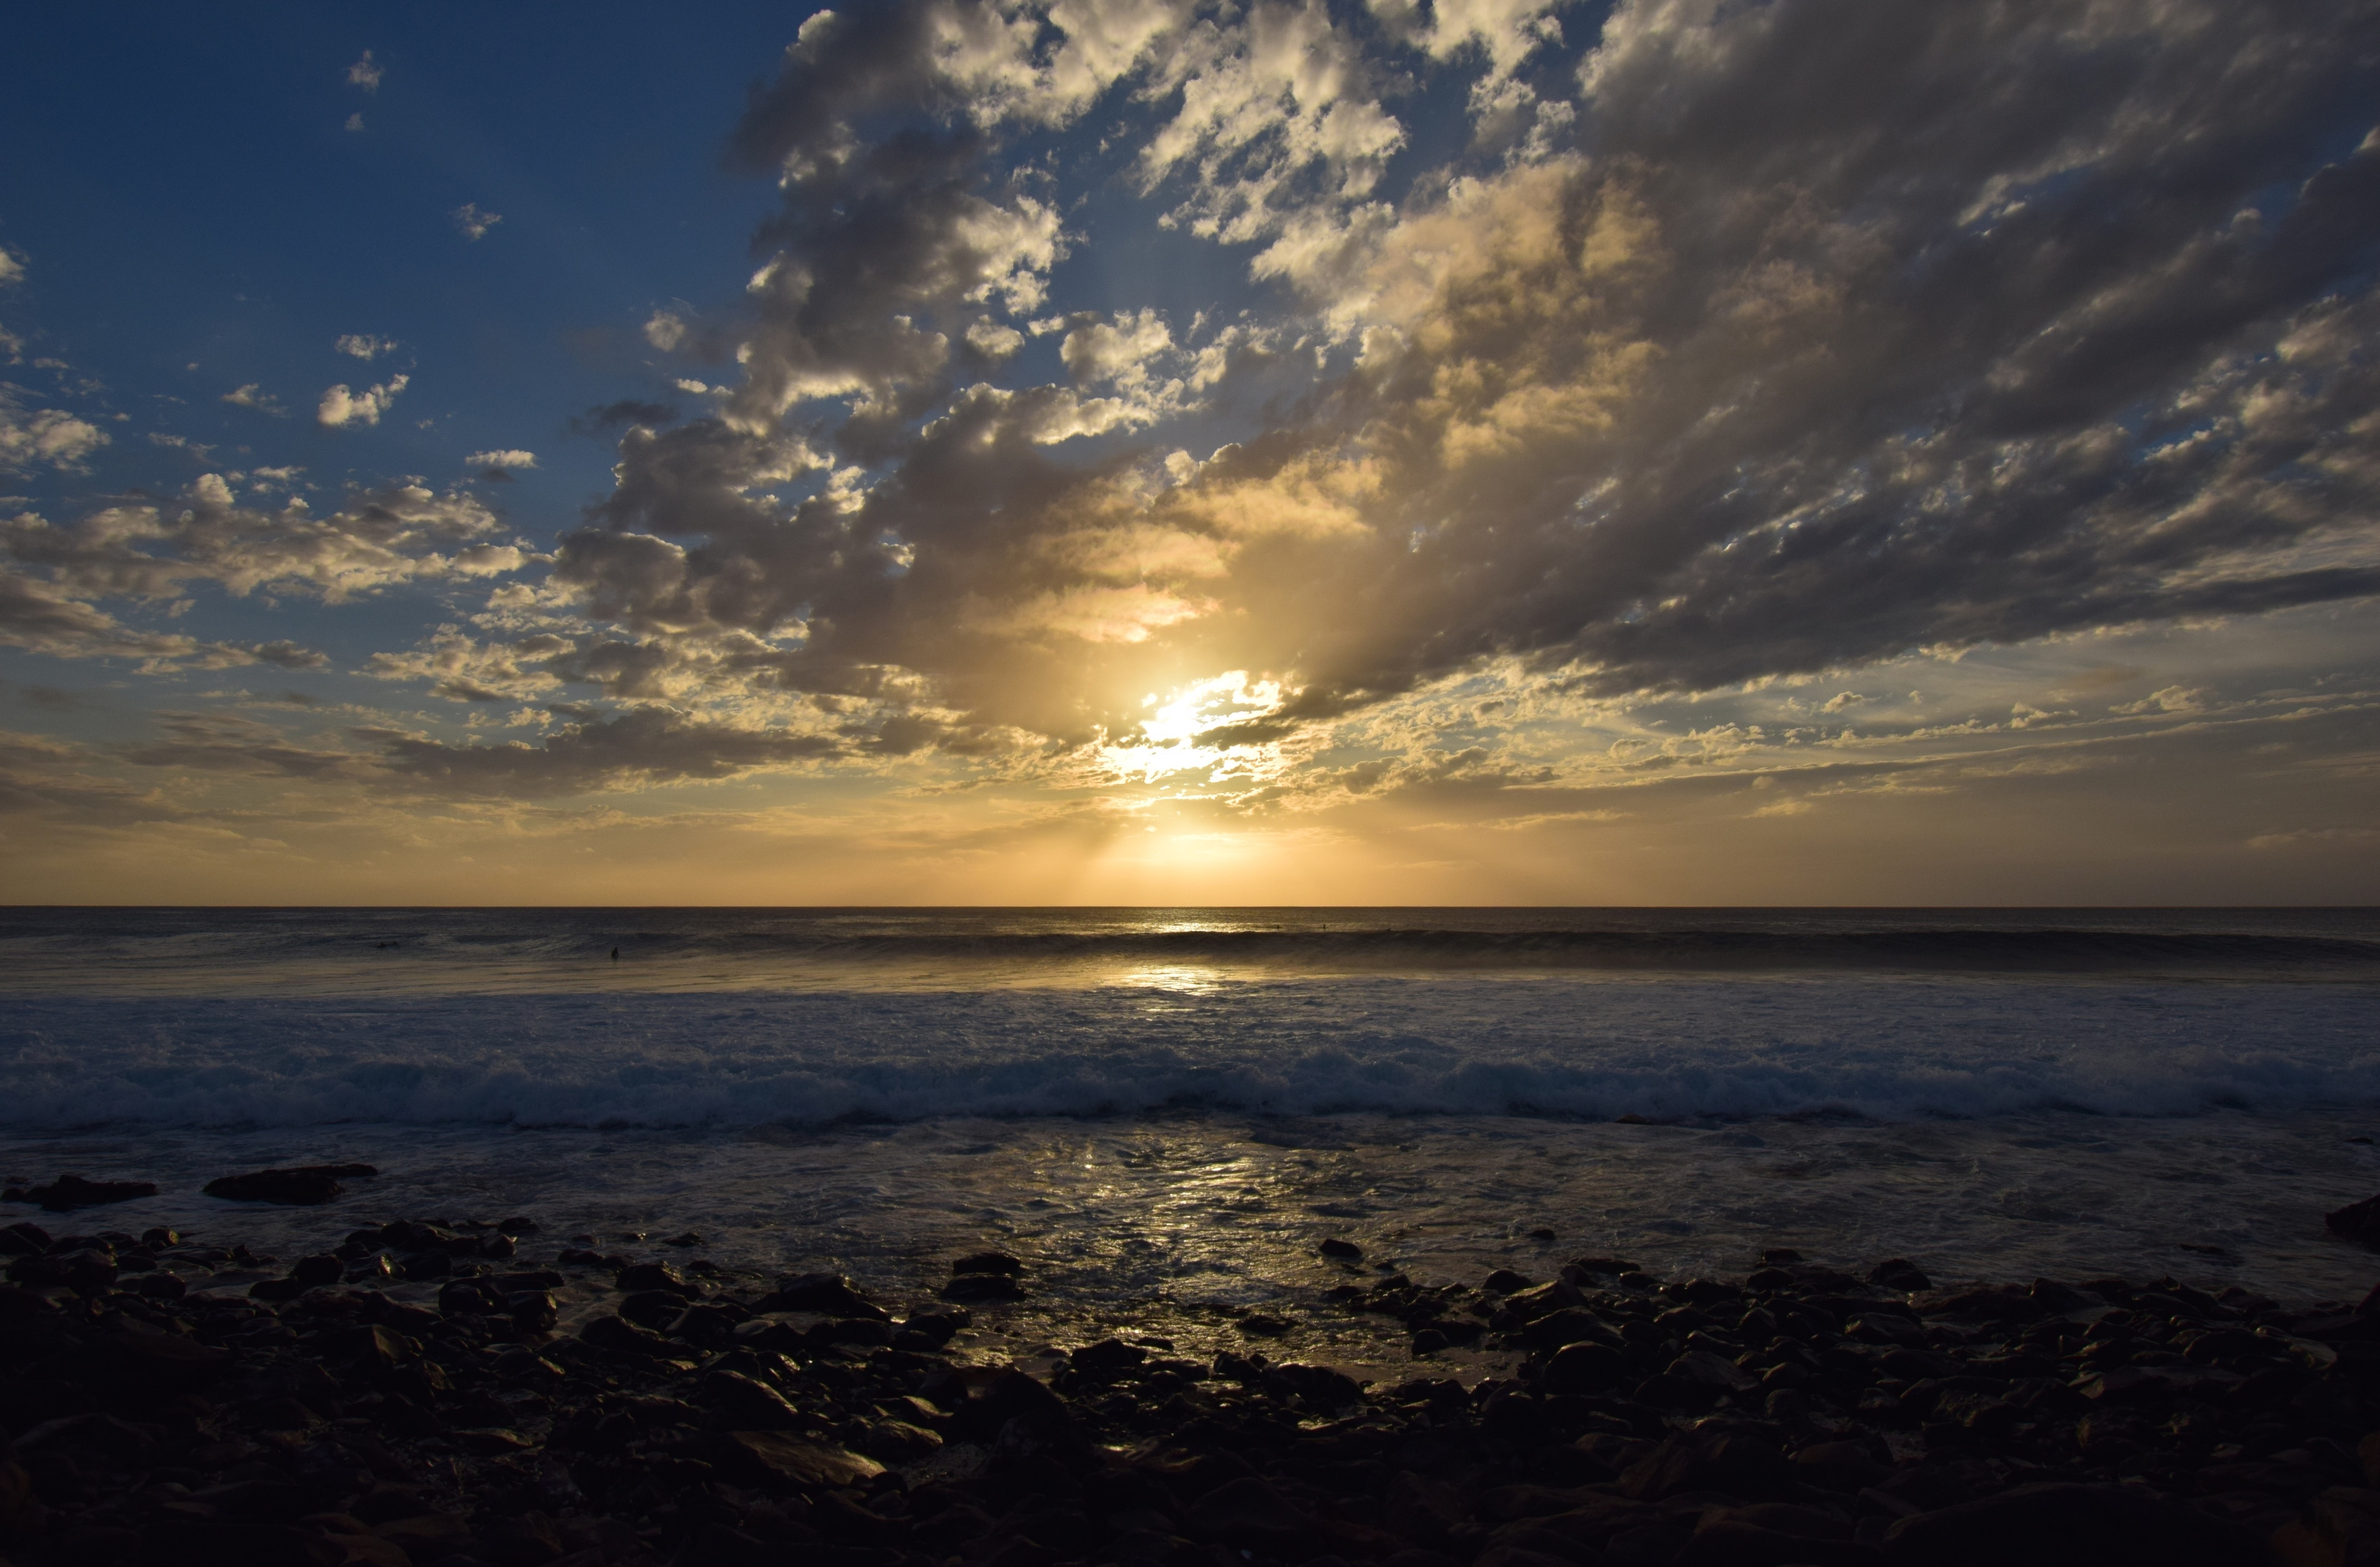 Sunset near Santa Maria, Sal / Cape Verde.
Shot in December 2018 with Nikon D5300 - unedited.